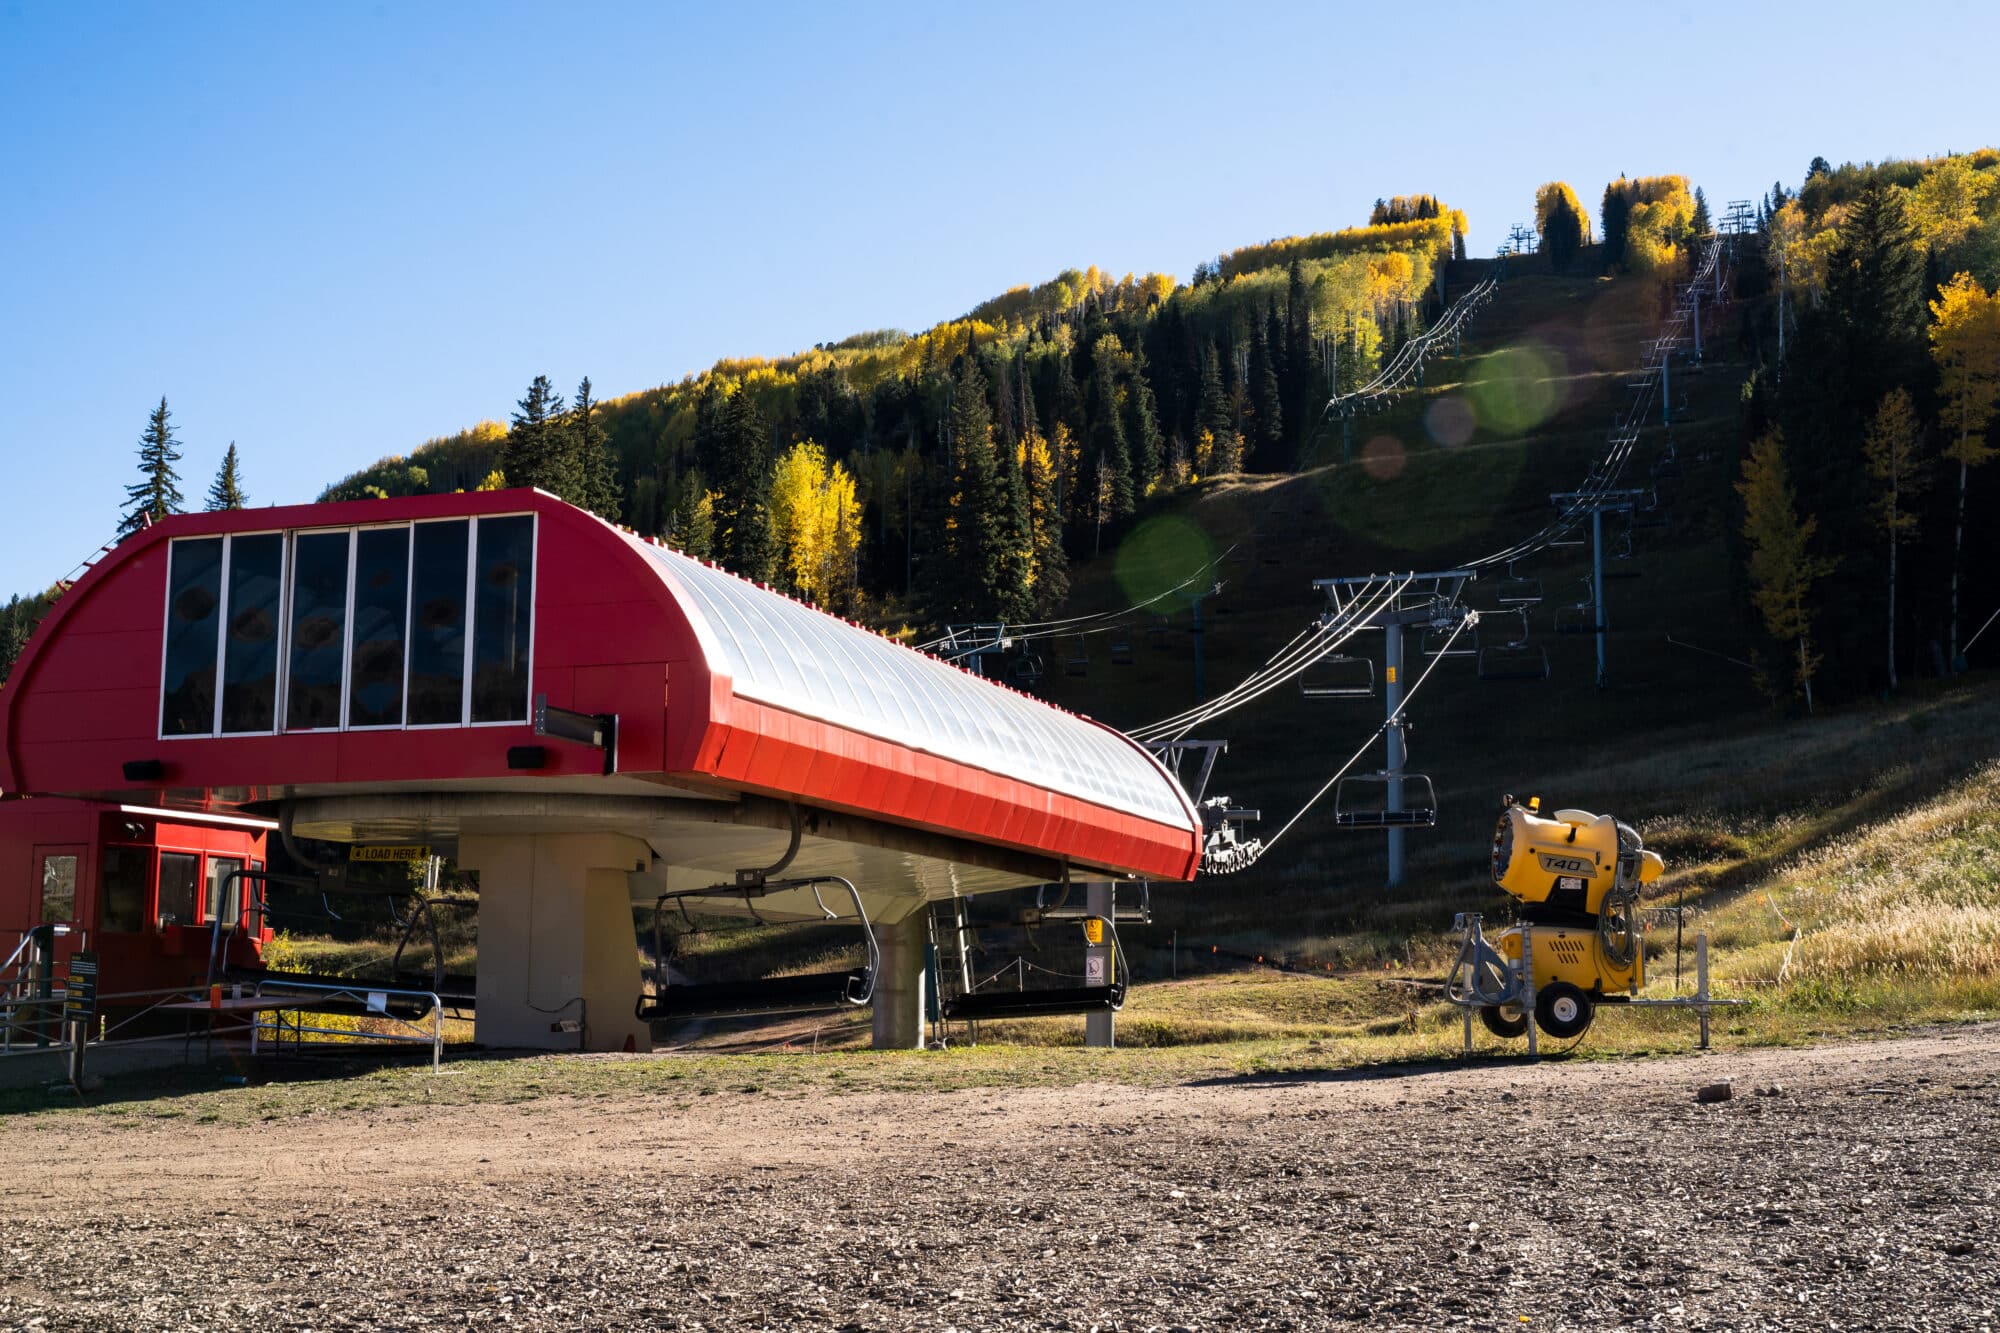 The Purgatory Express lift during peak fall colors